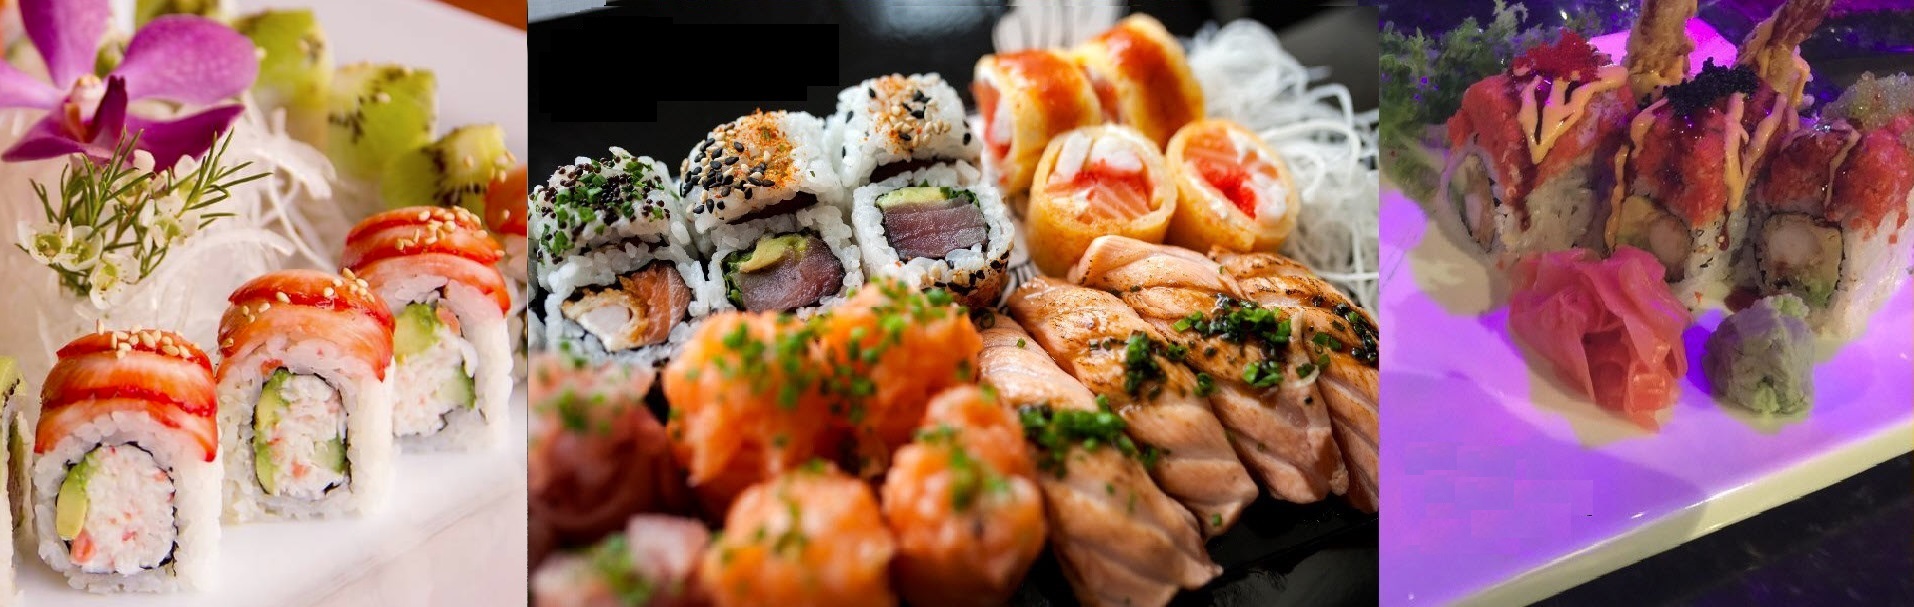 Your favorite Japanese cuisineat Nagoya Hibachi & Sushi Burrito